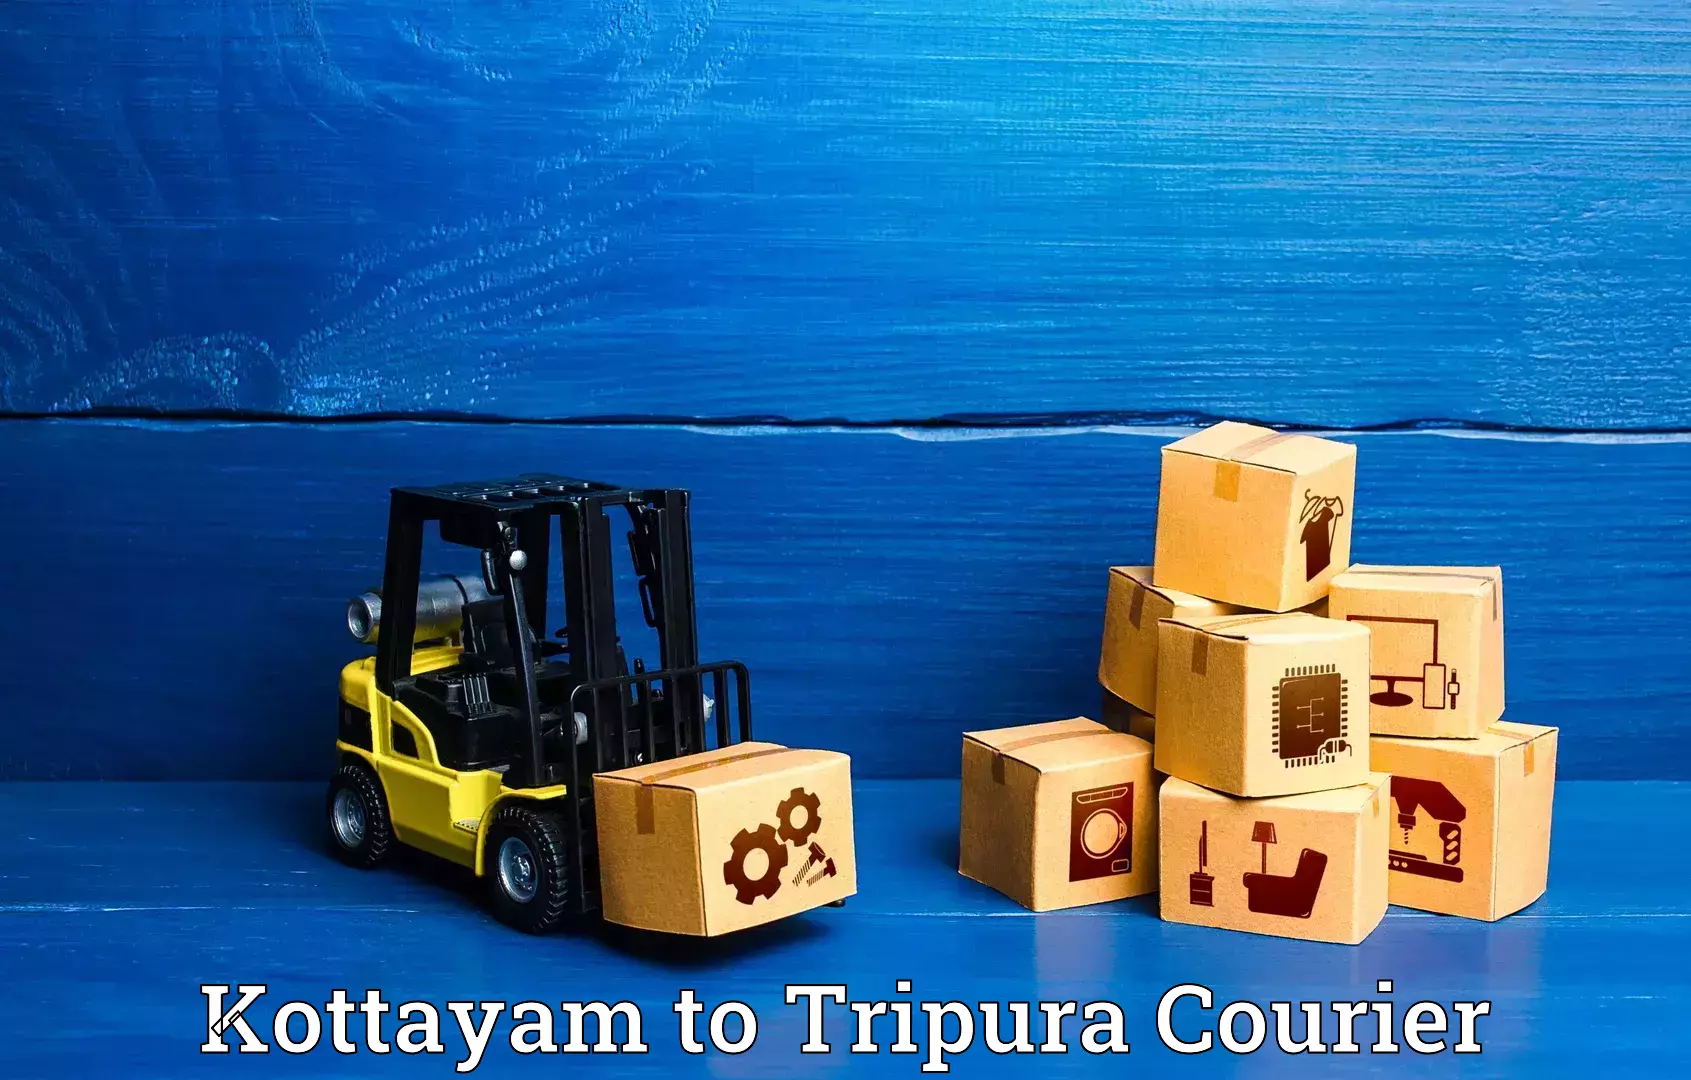 Urgent luggage shipment Kottayam to Tripura